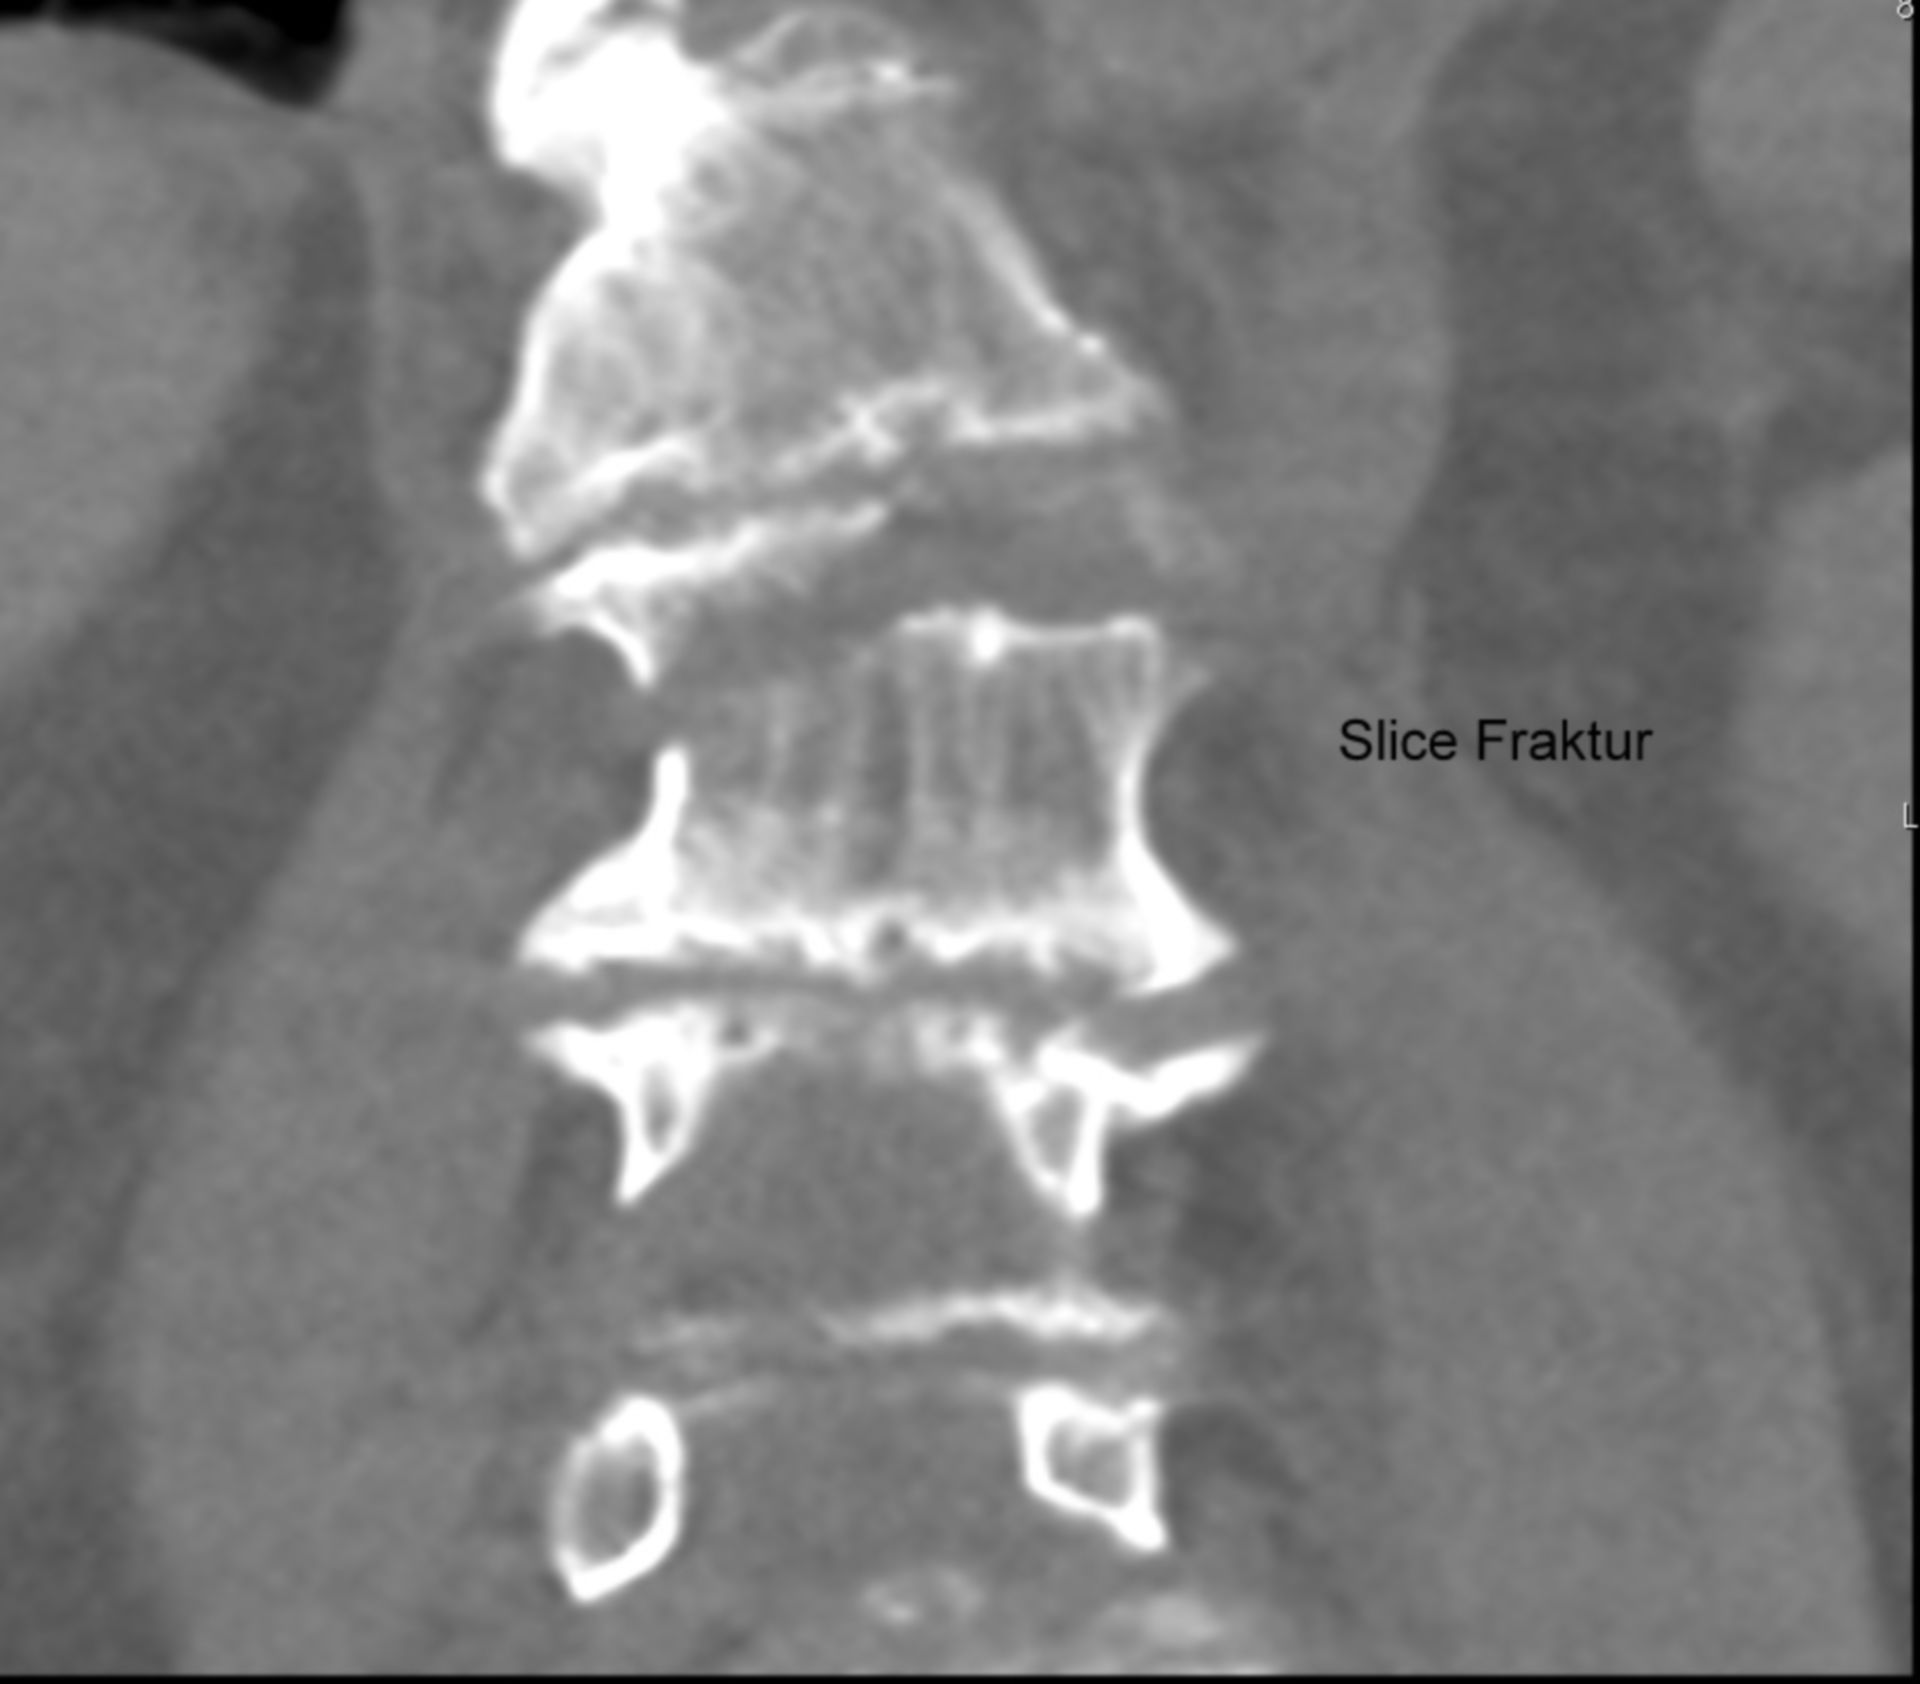 Vertebral fracture- Slice fracture